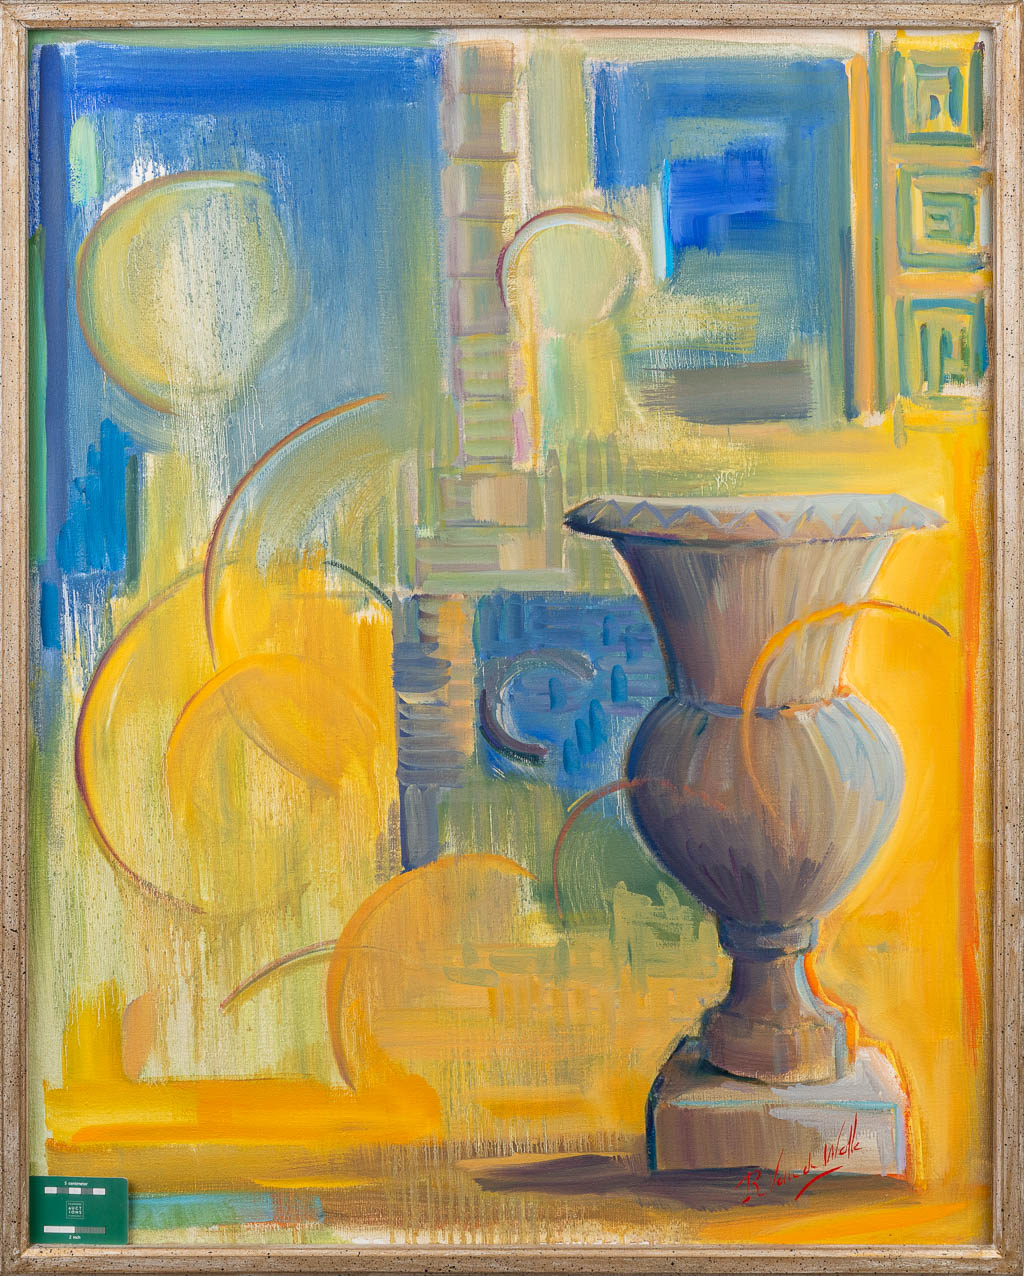 Rik VAN DE WALLE (XX) 'Garden vase' a painting, oil on canvas. Around 2000. (80 x 100 cm)